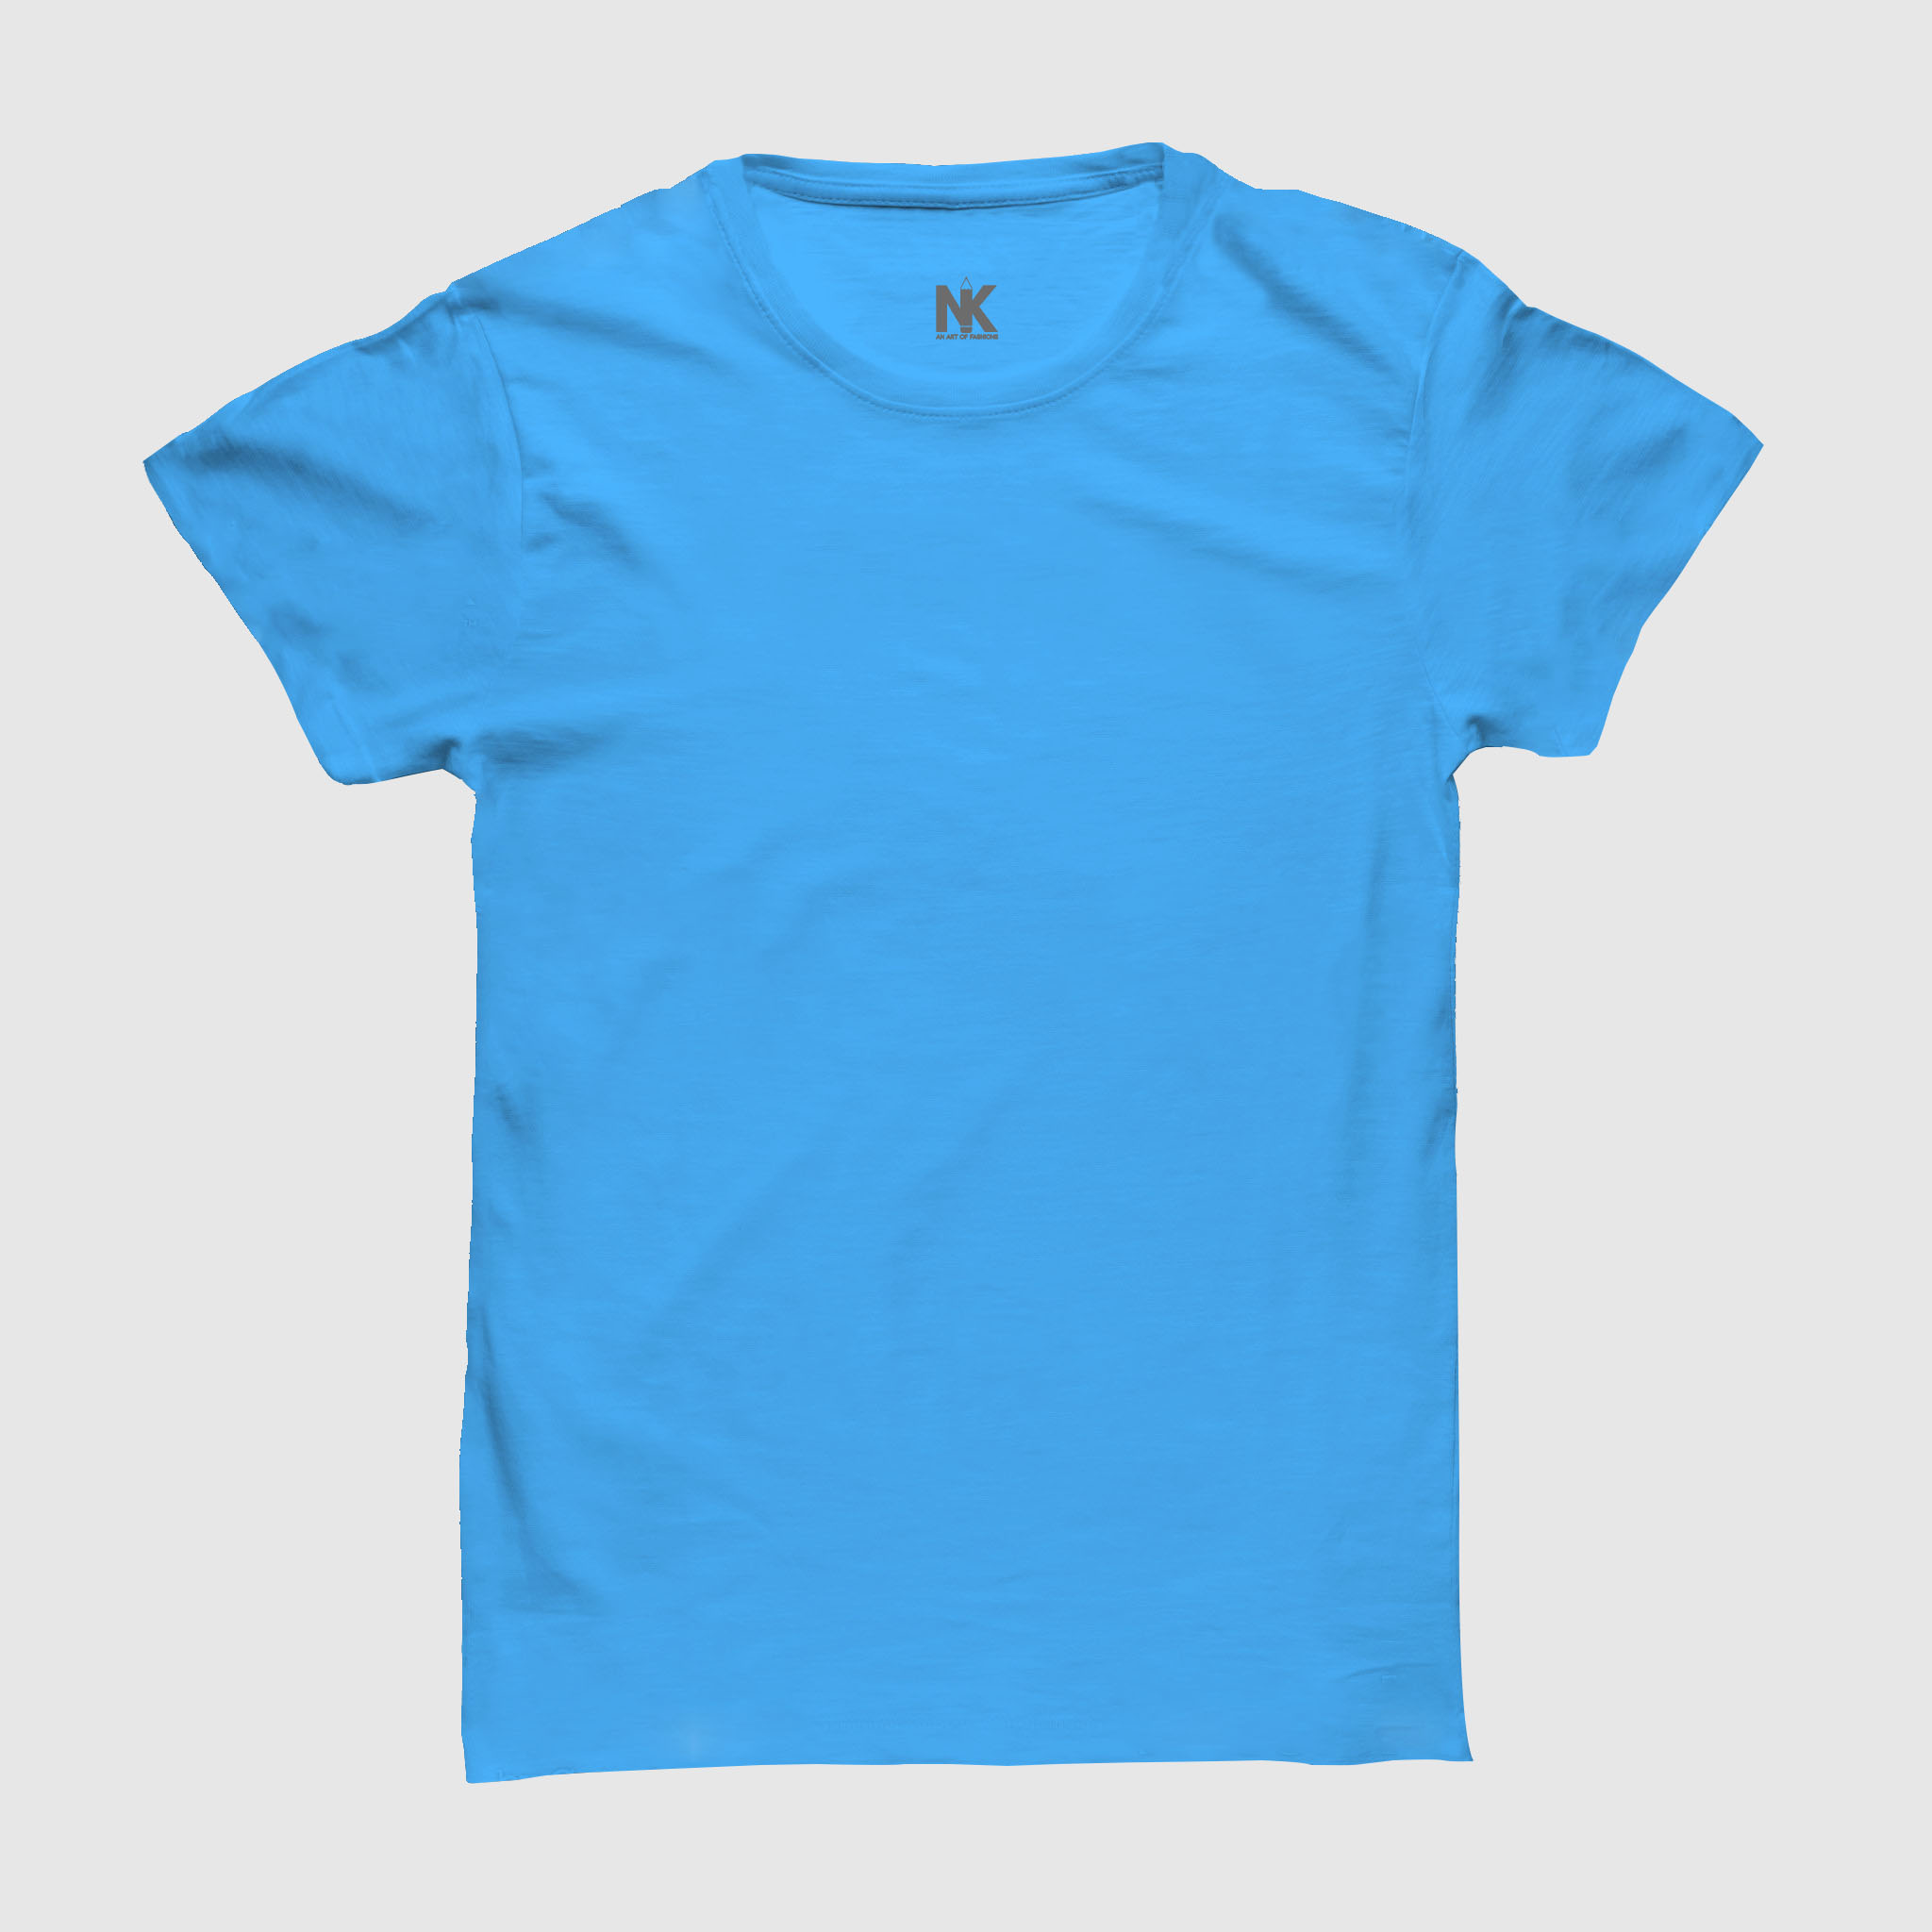 Sky Blue Plain T-shirts | Sky Blue Solid T-shirts | nikfashions